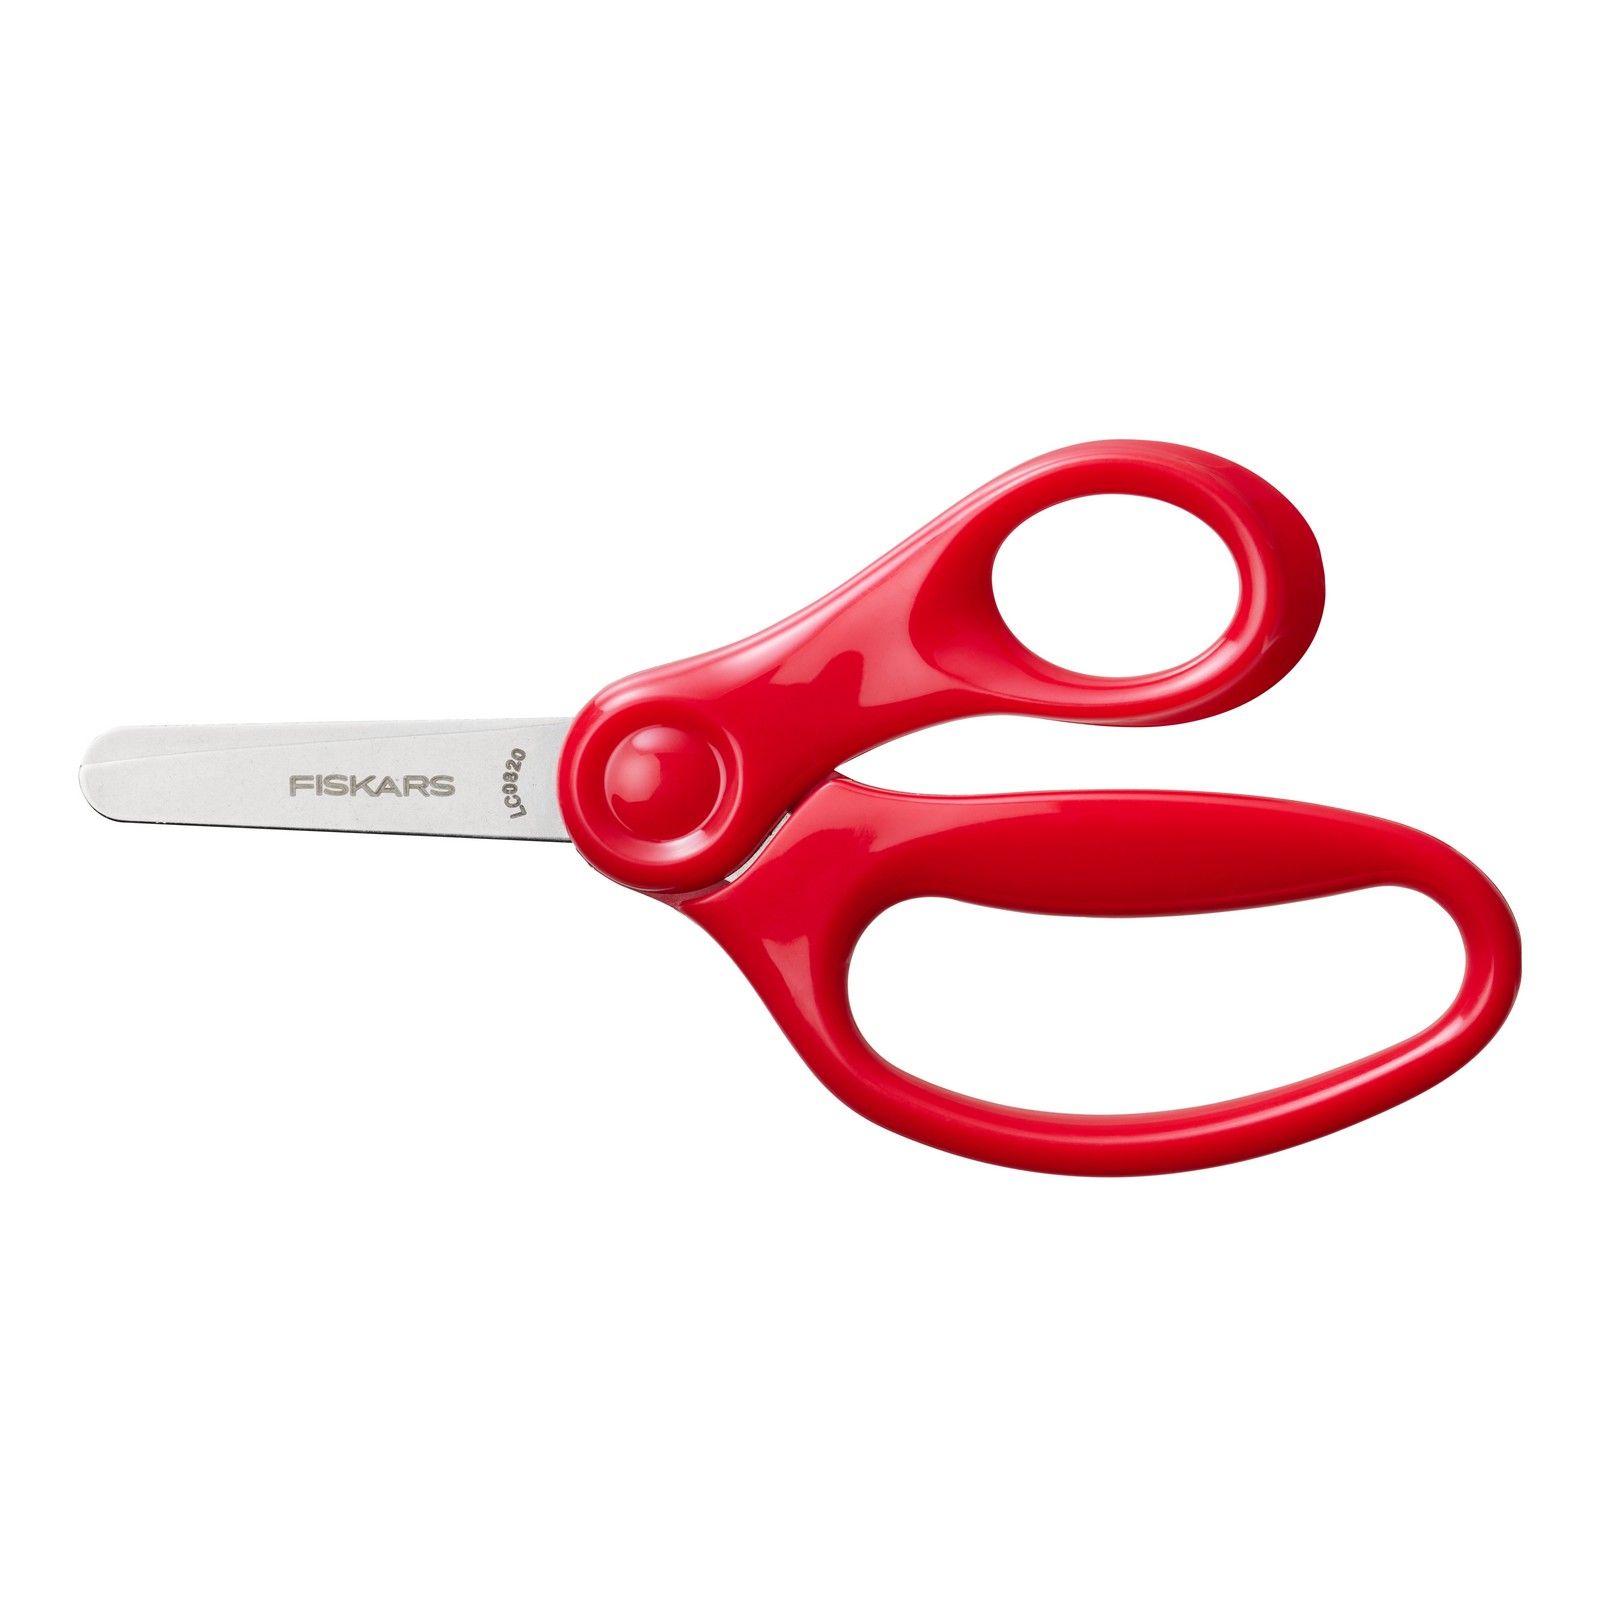 Fiskars • Blunt-tip Kids Scissors Red for +6 years old